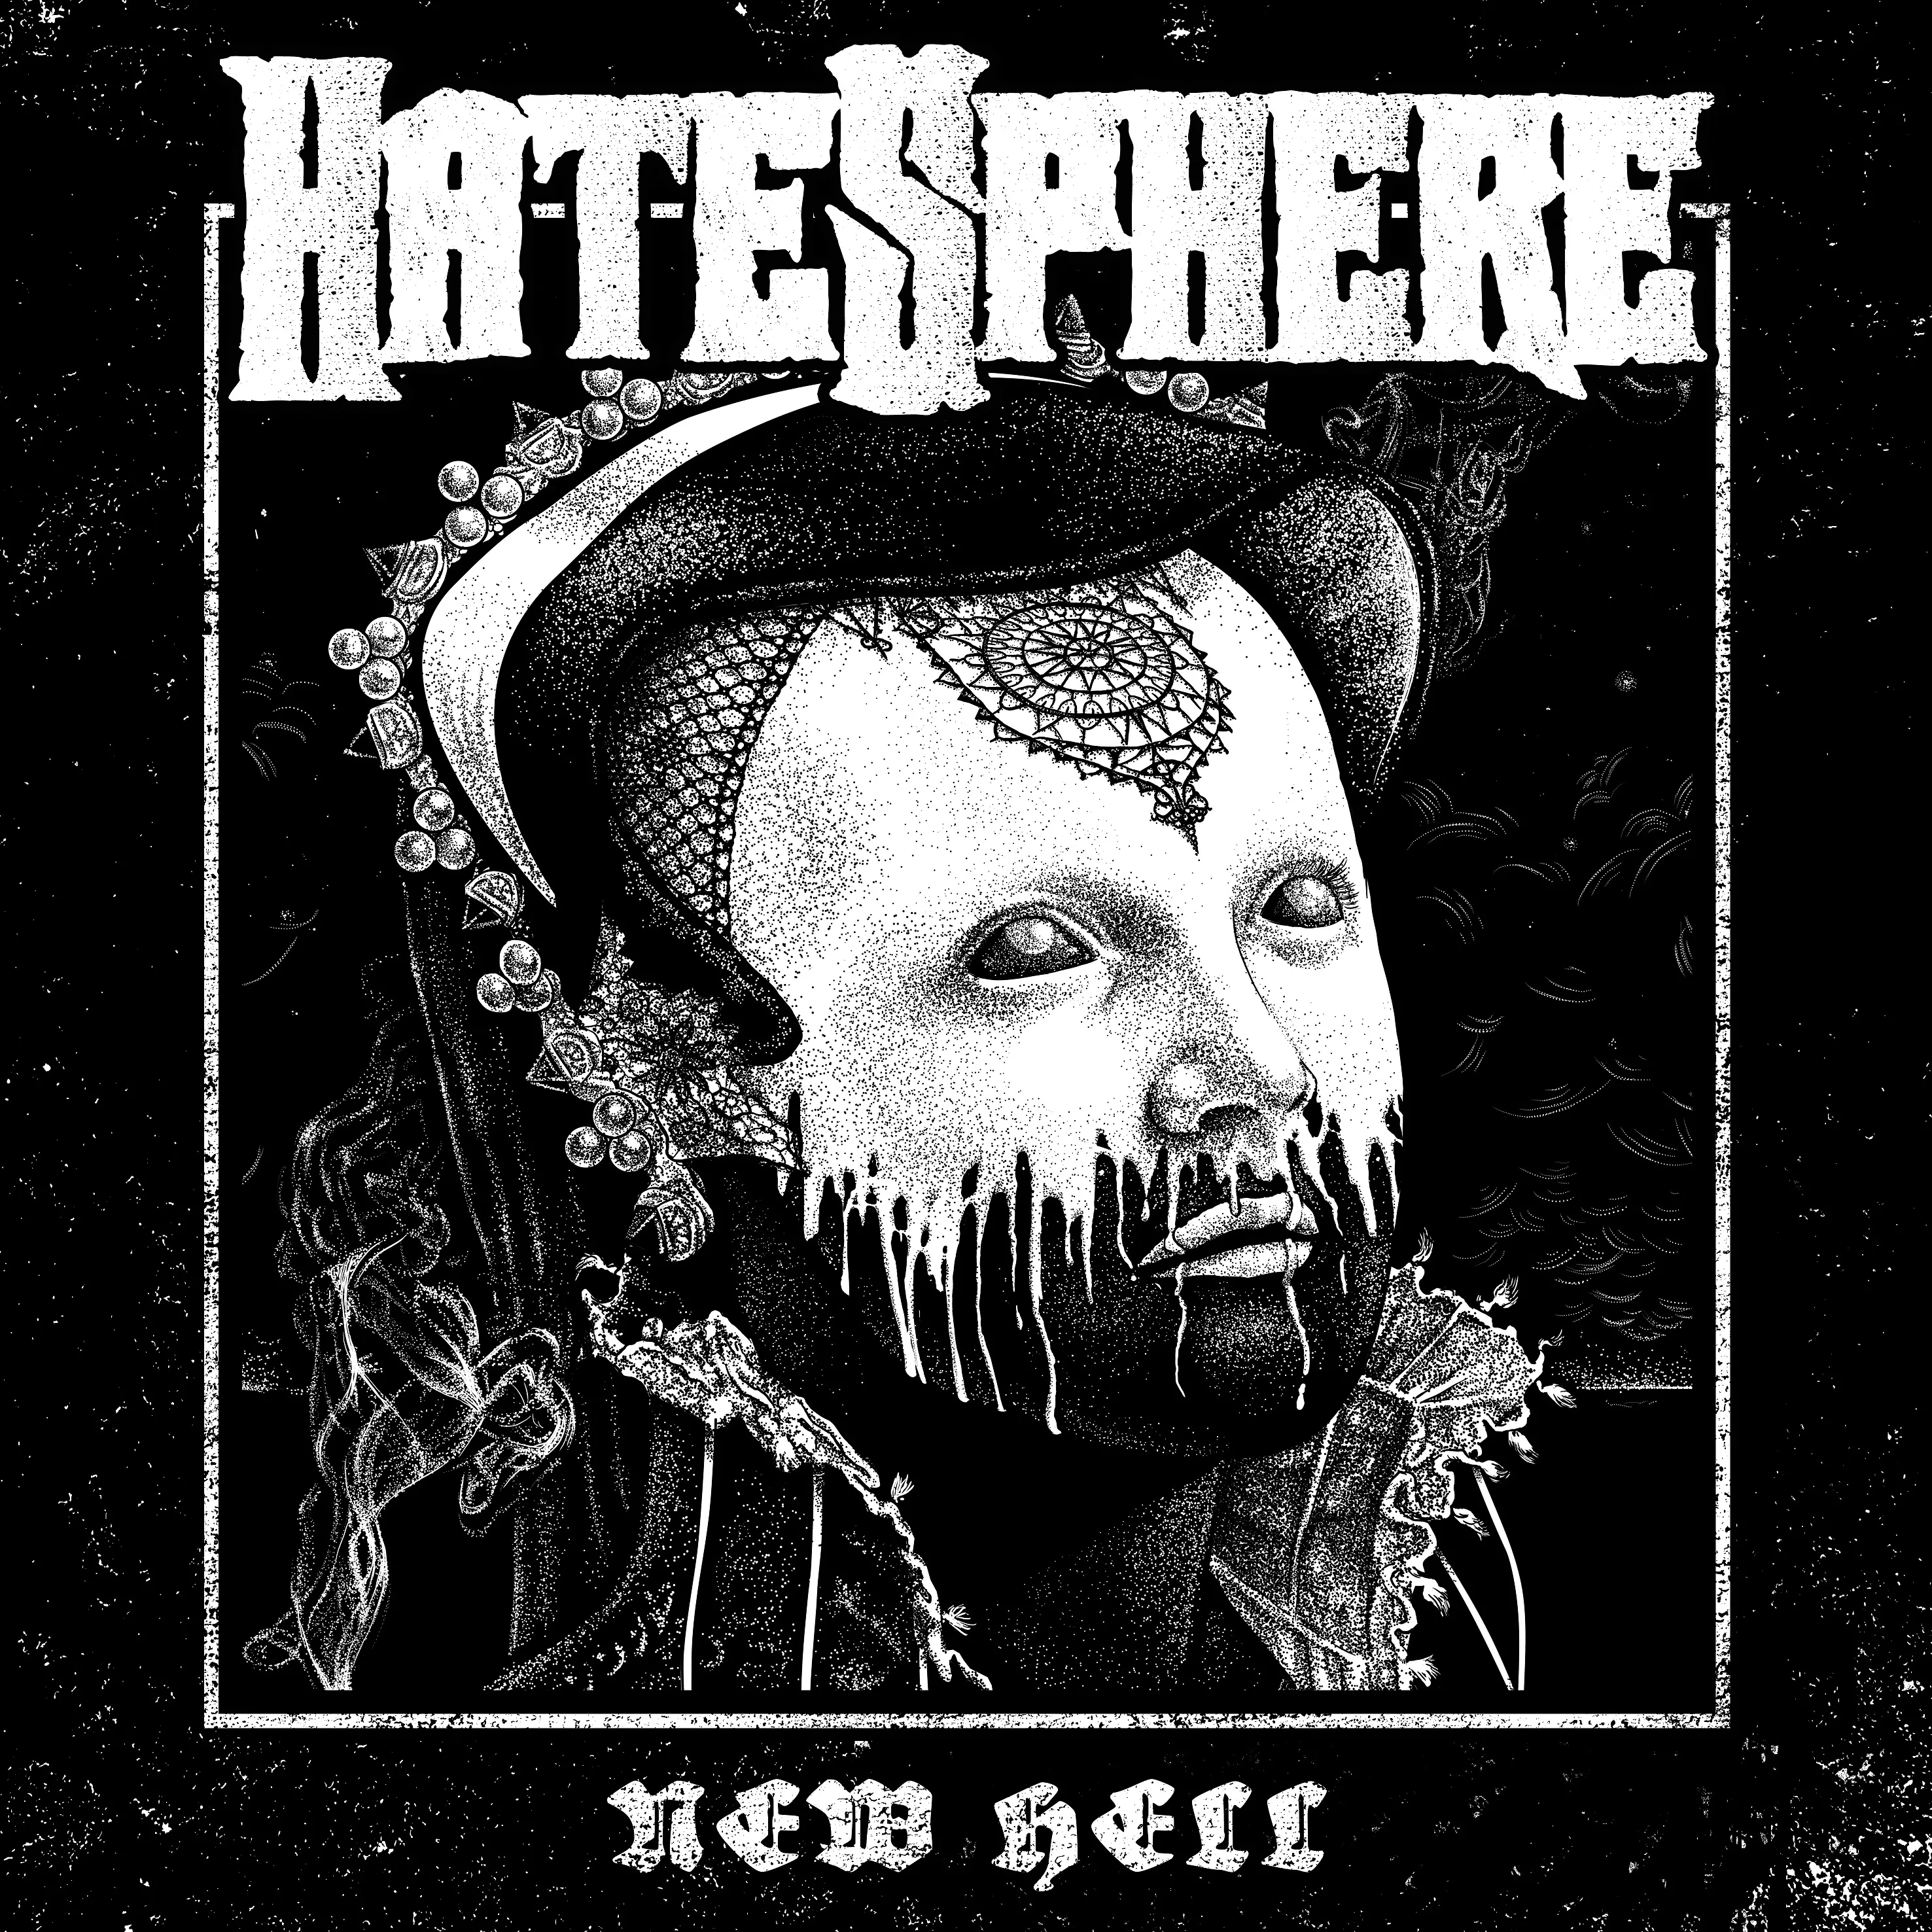 New Hell - Hatesphere